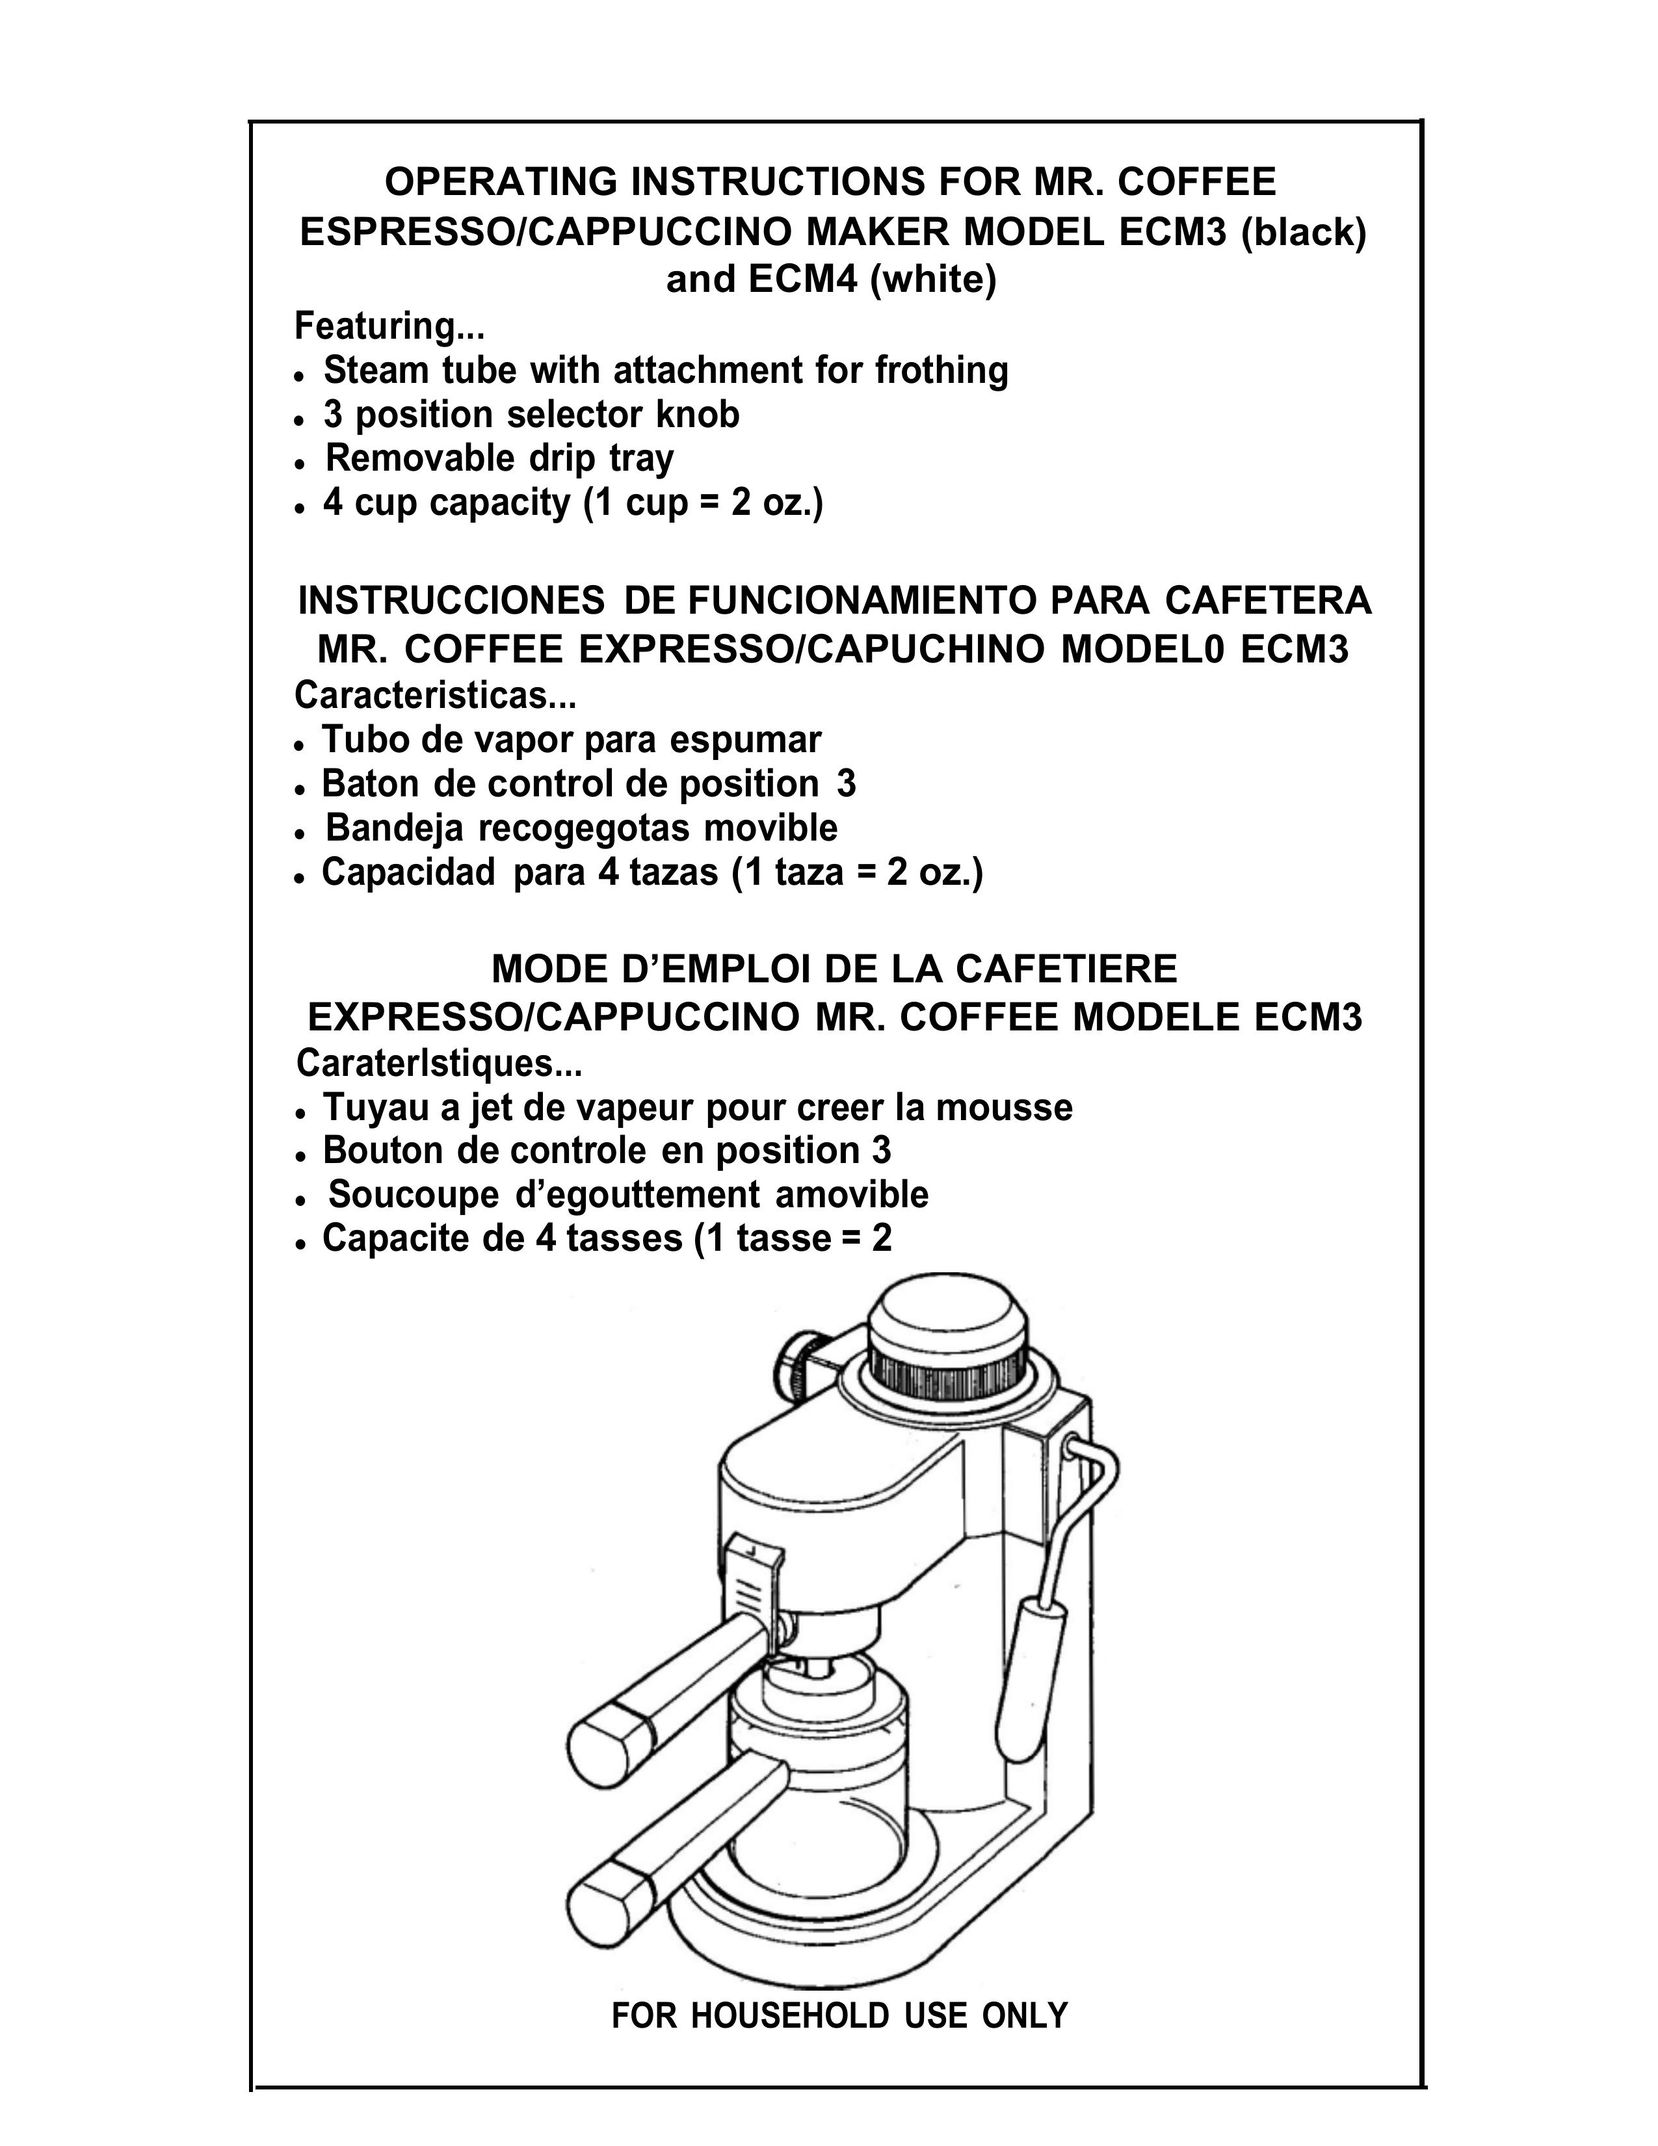 Mr. Coffee ECM3 Espresso Maker User Manual